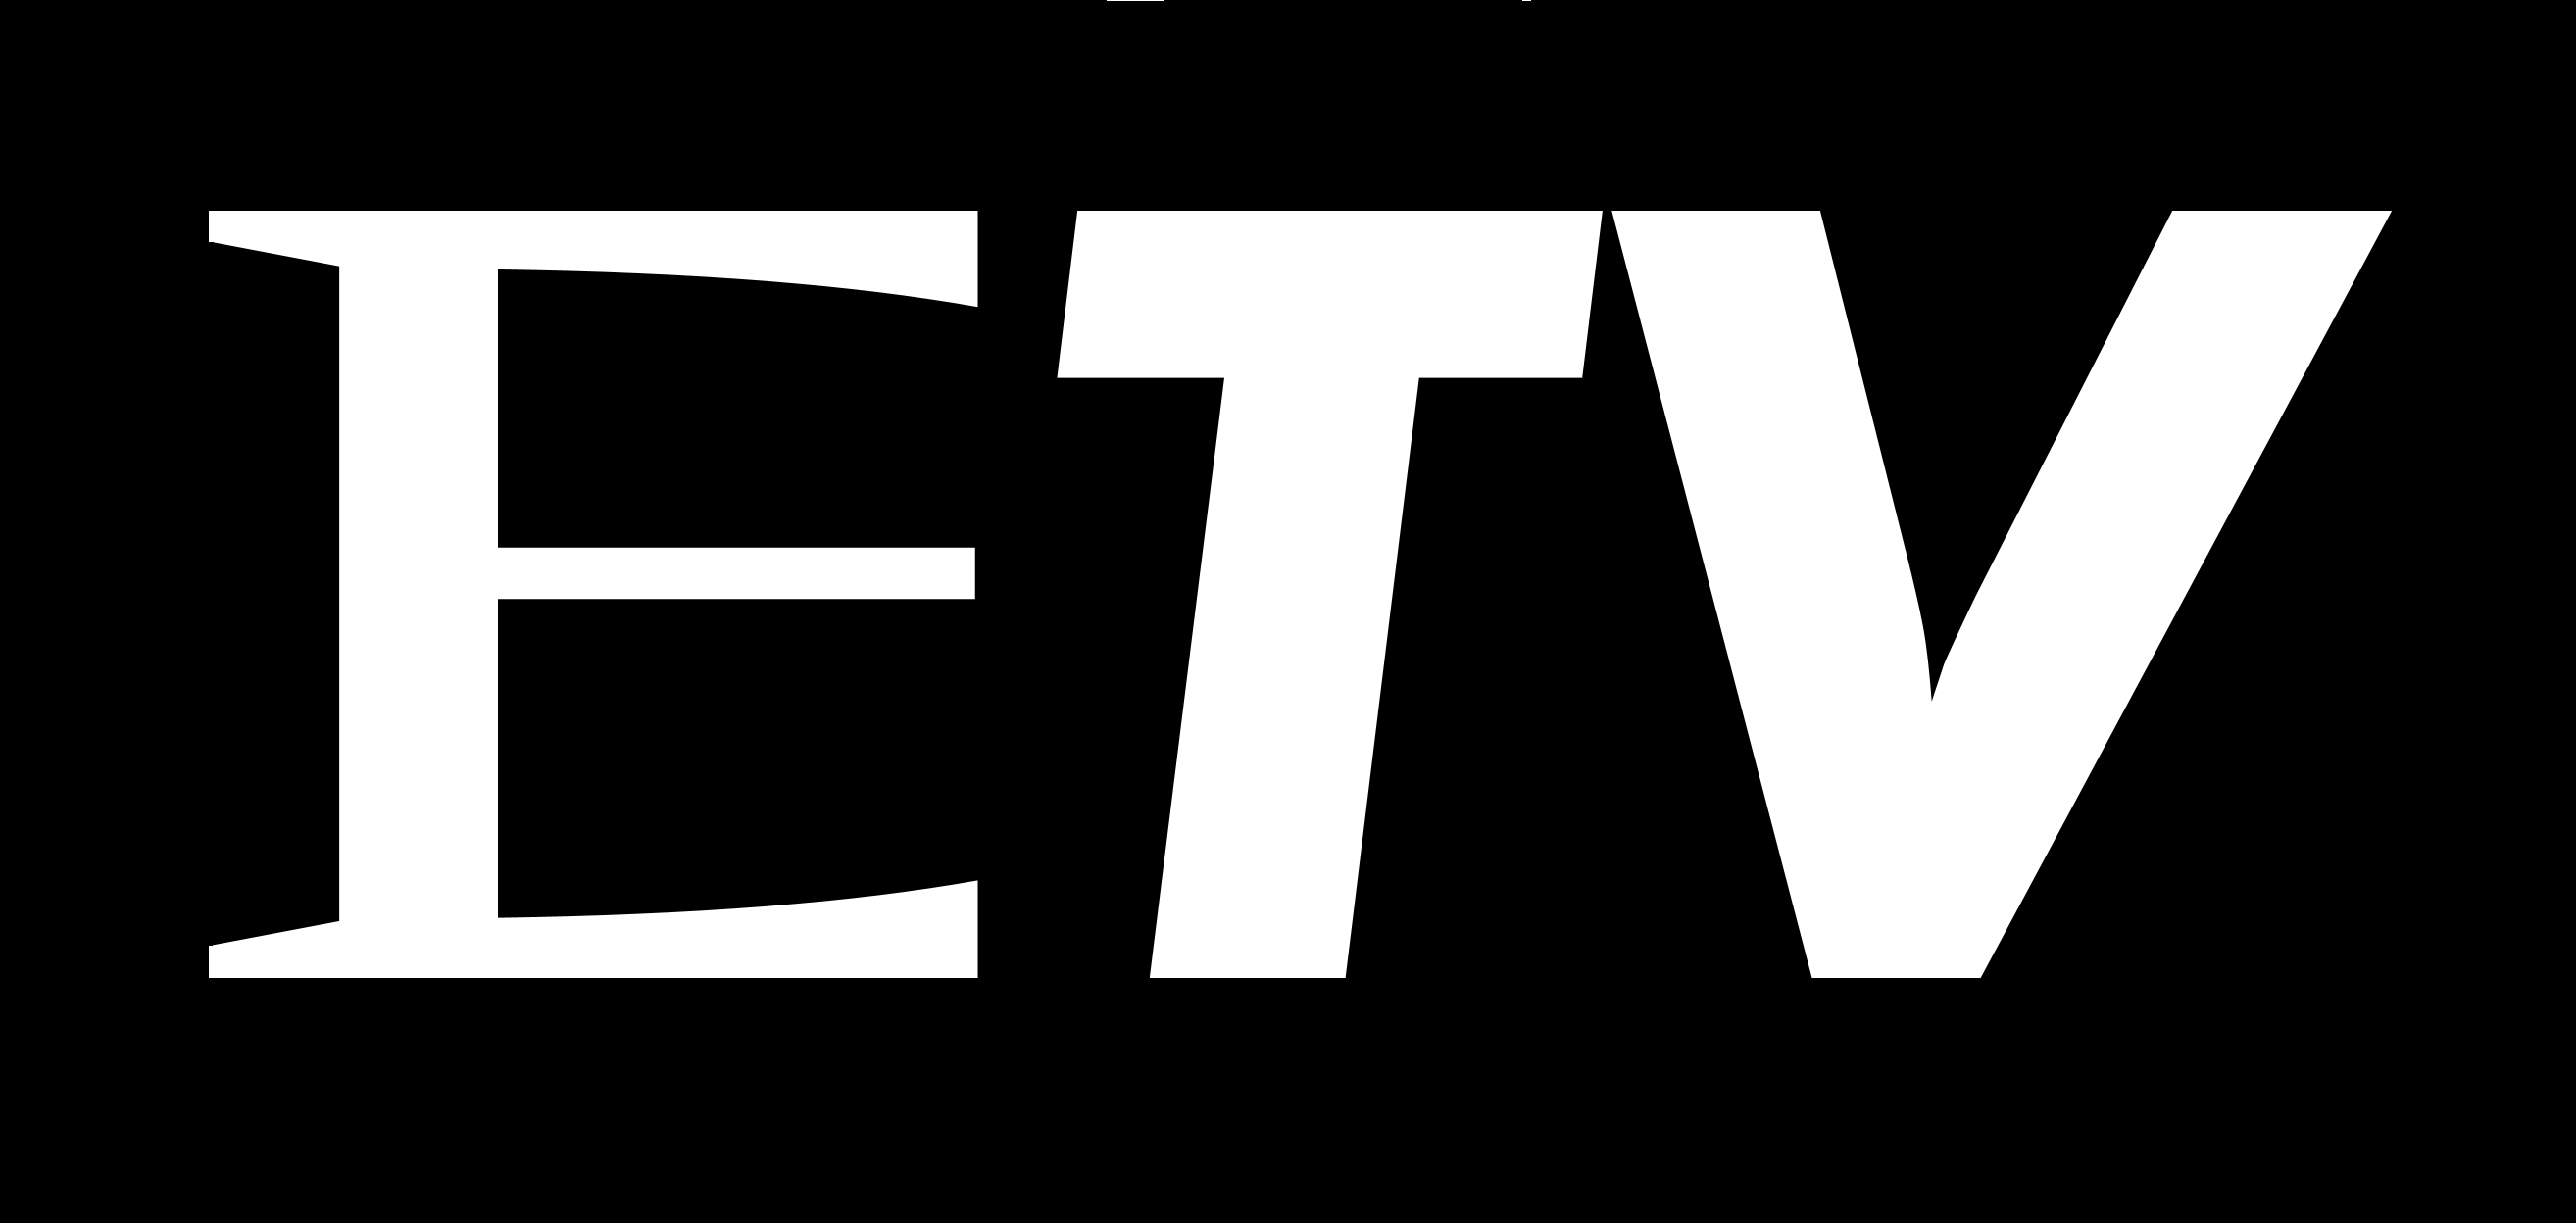 Etv logo letter design Royalty Free Vector Image